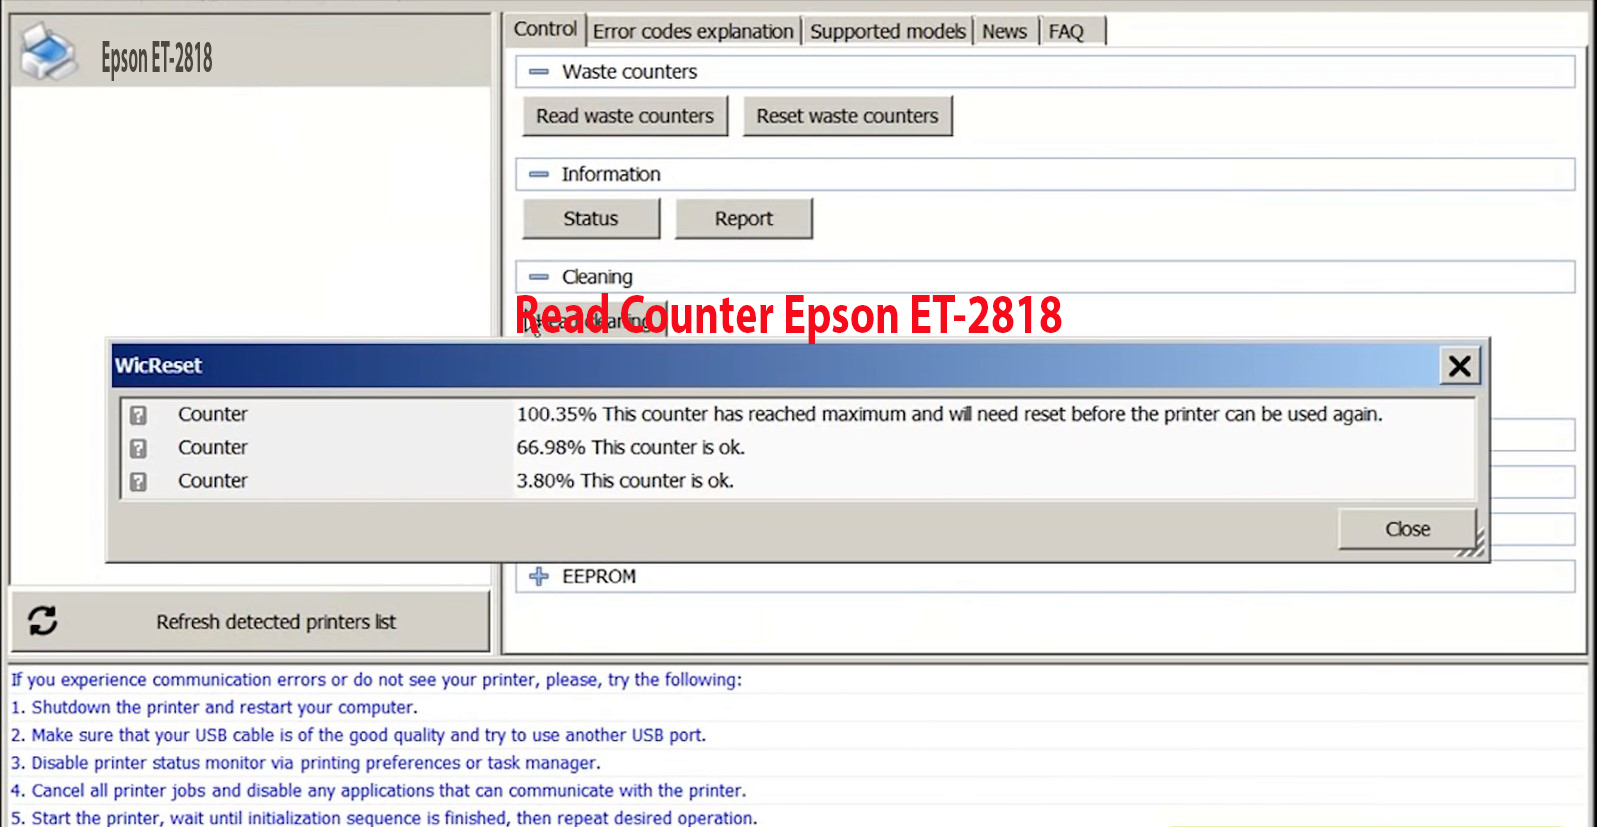 Reset Epson ET-2818 Step 2